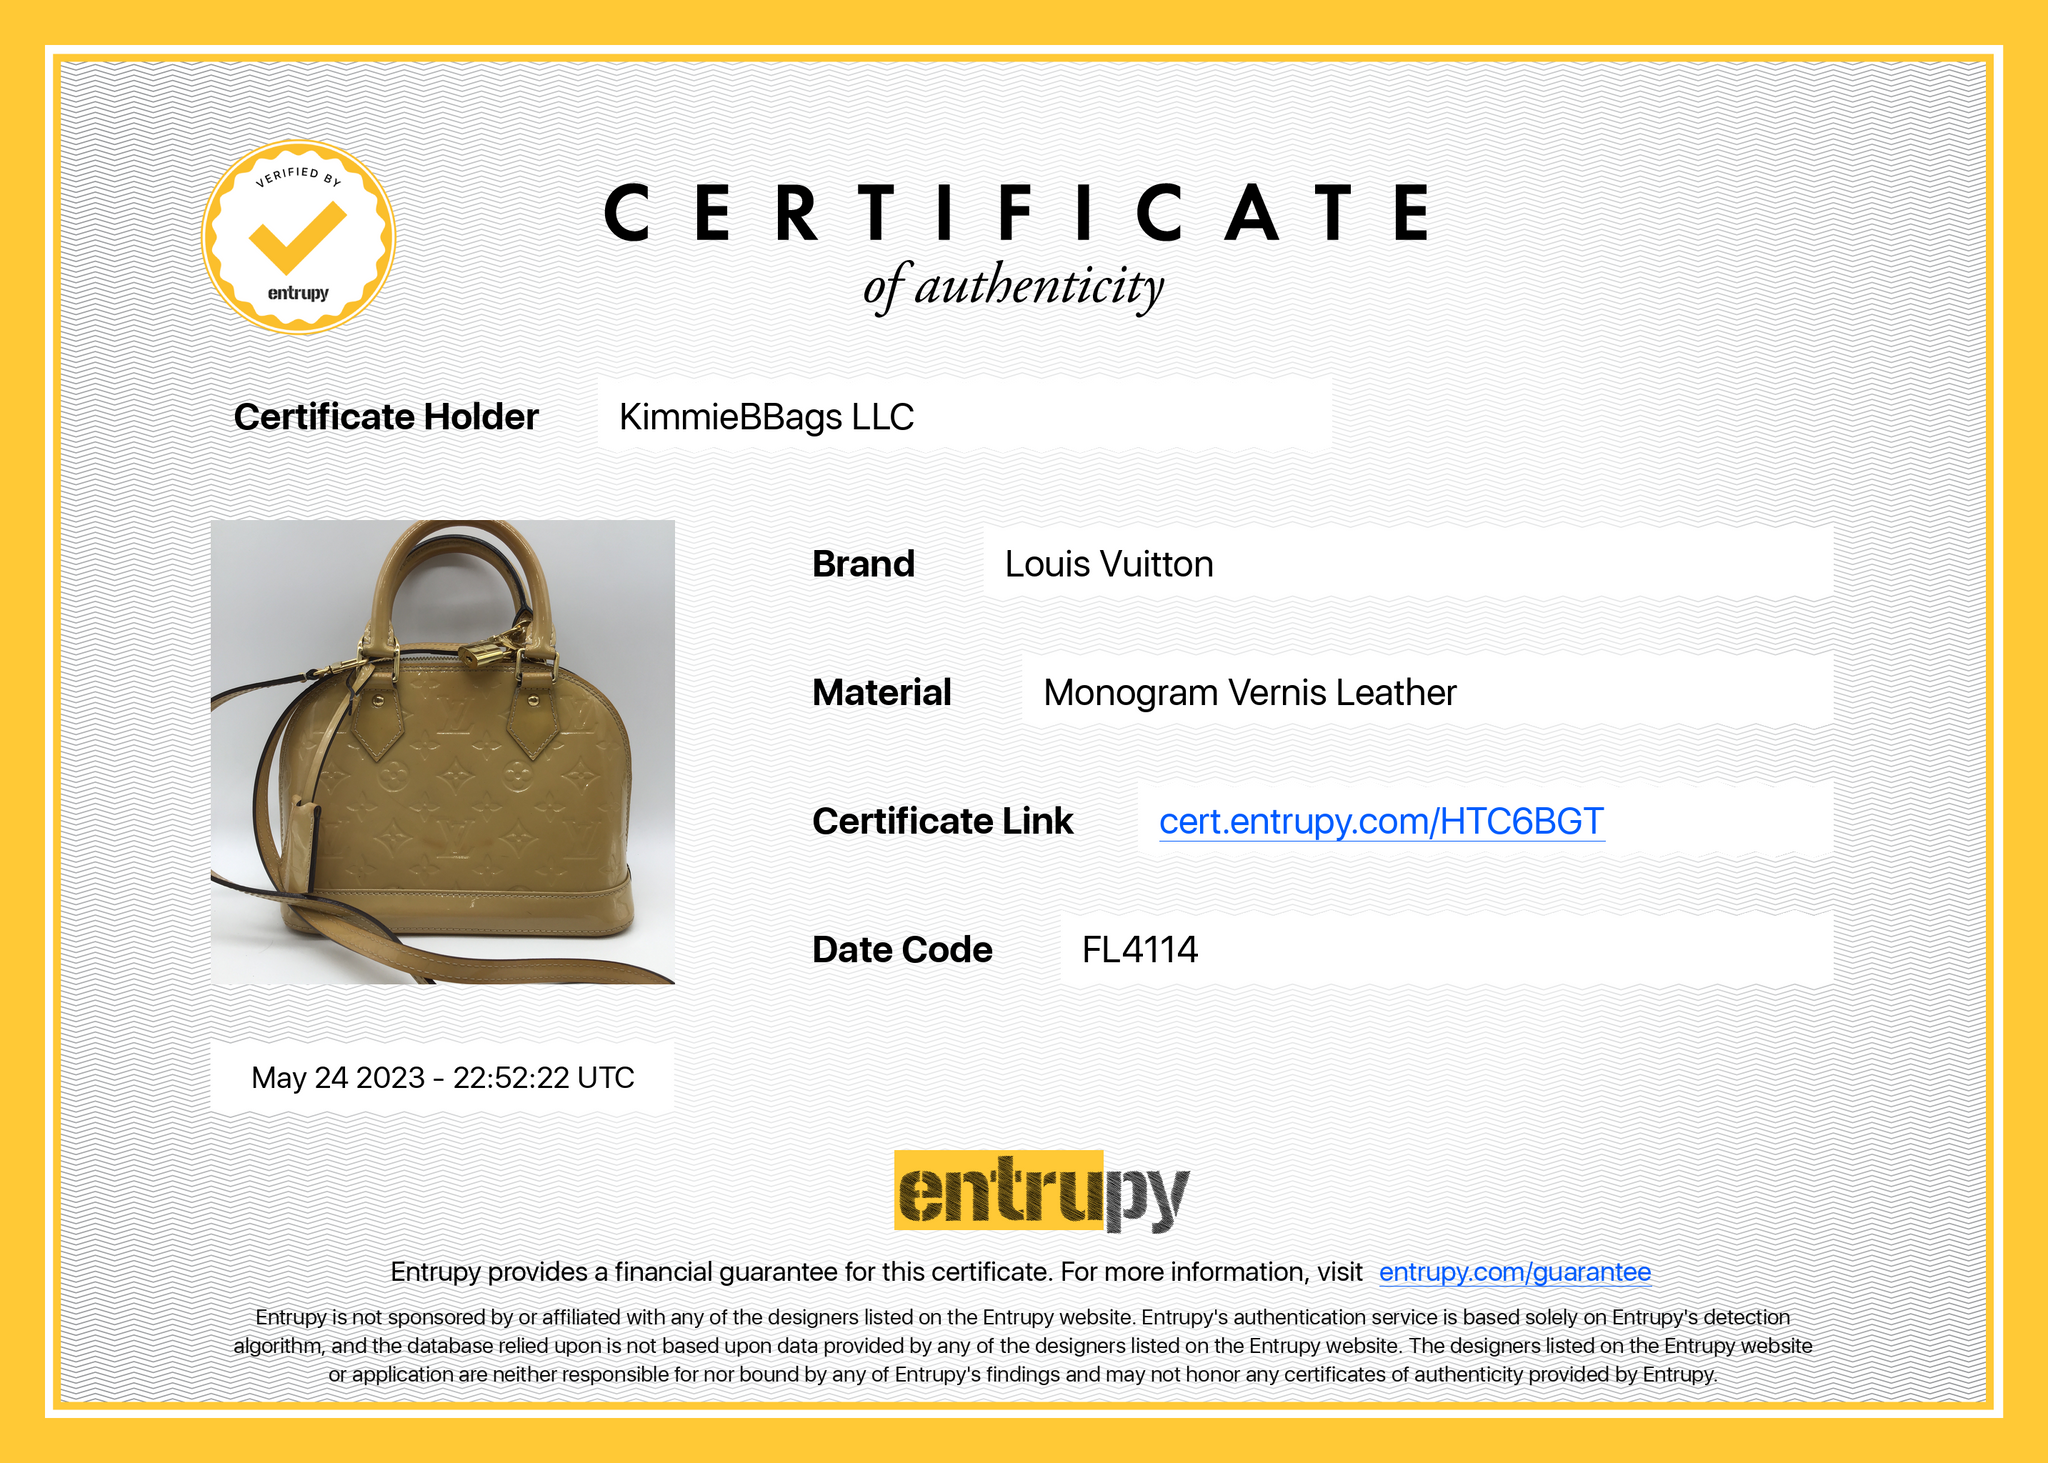 Preloved Louis Vuitton Yellow Vernis Leather Alma Bb Handbag FL1164 072423